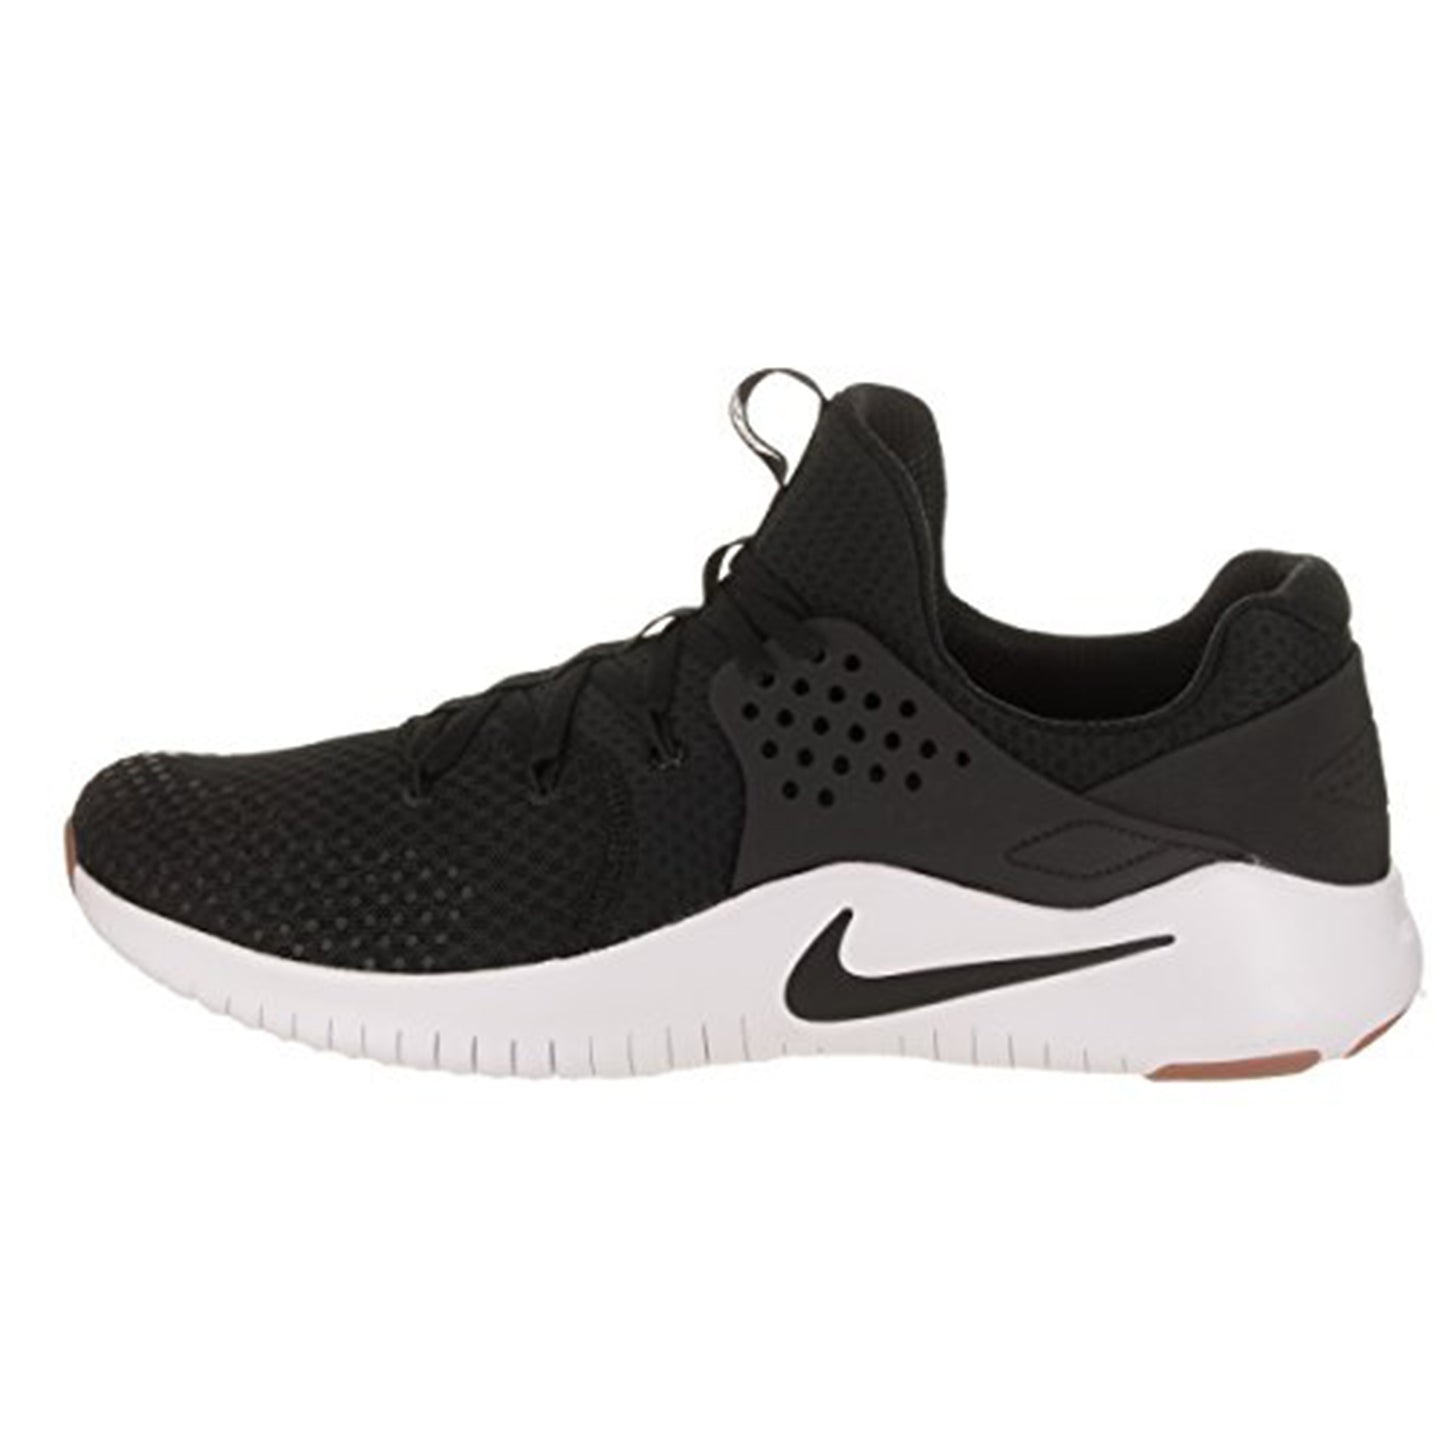 Nike Hombres Free TR 8 Talla 7.5 - AH9395 002 Negro/Blanco